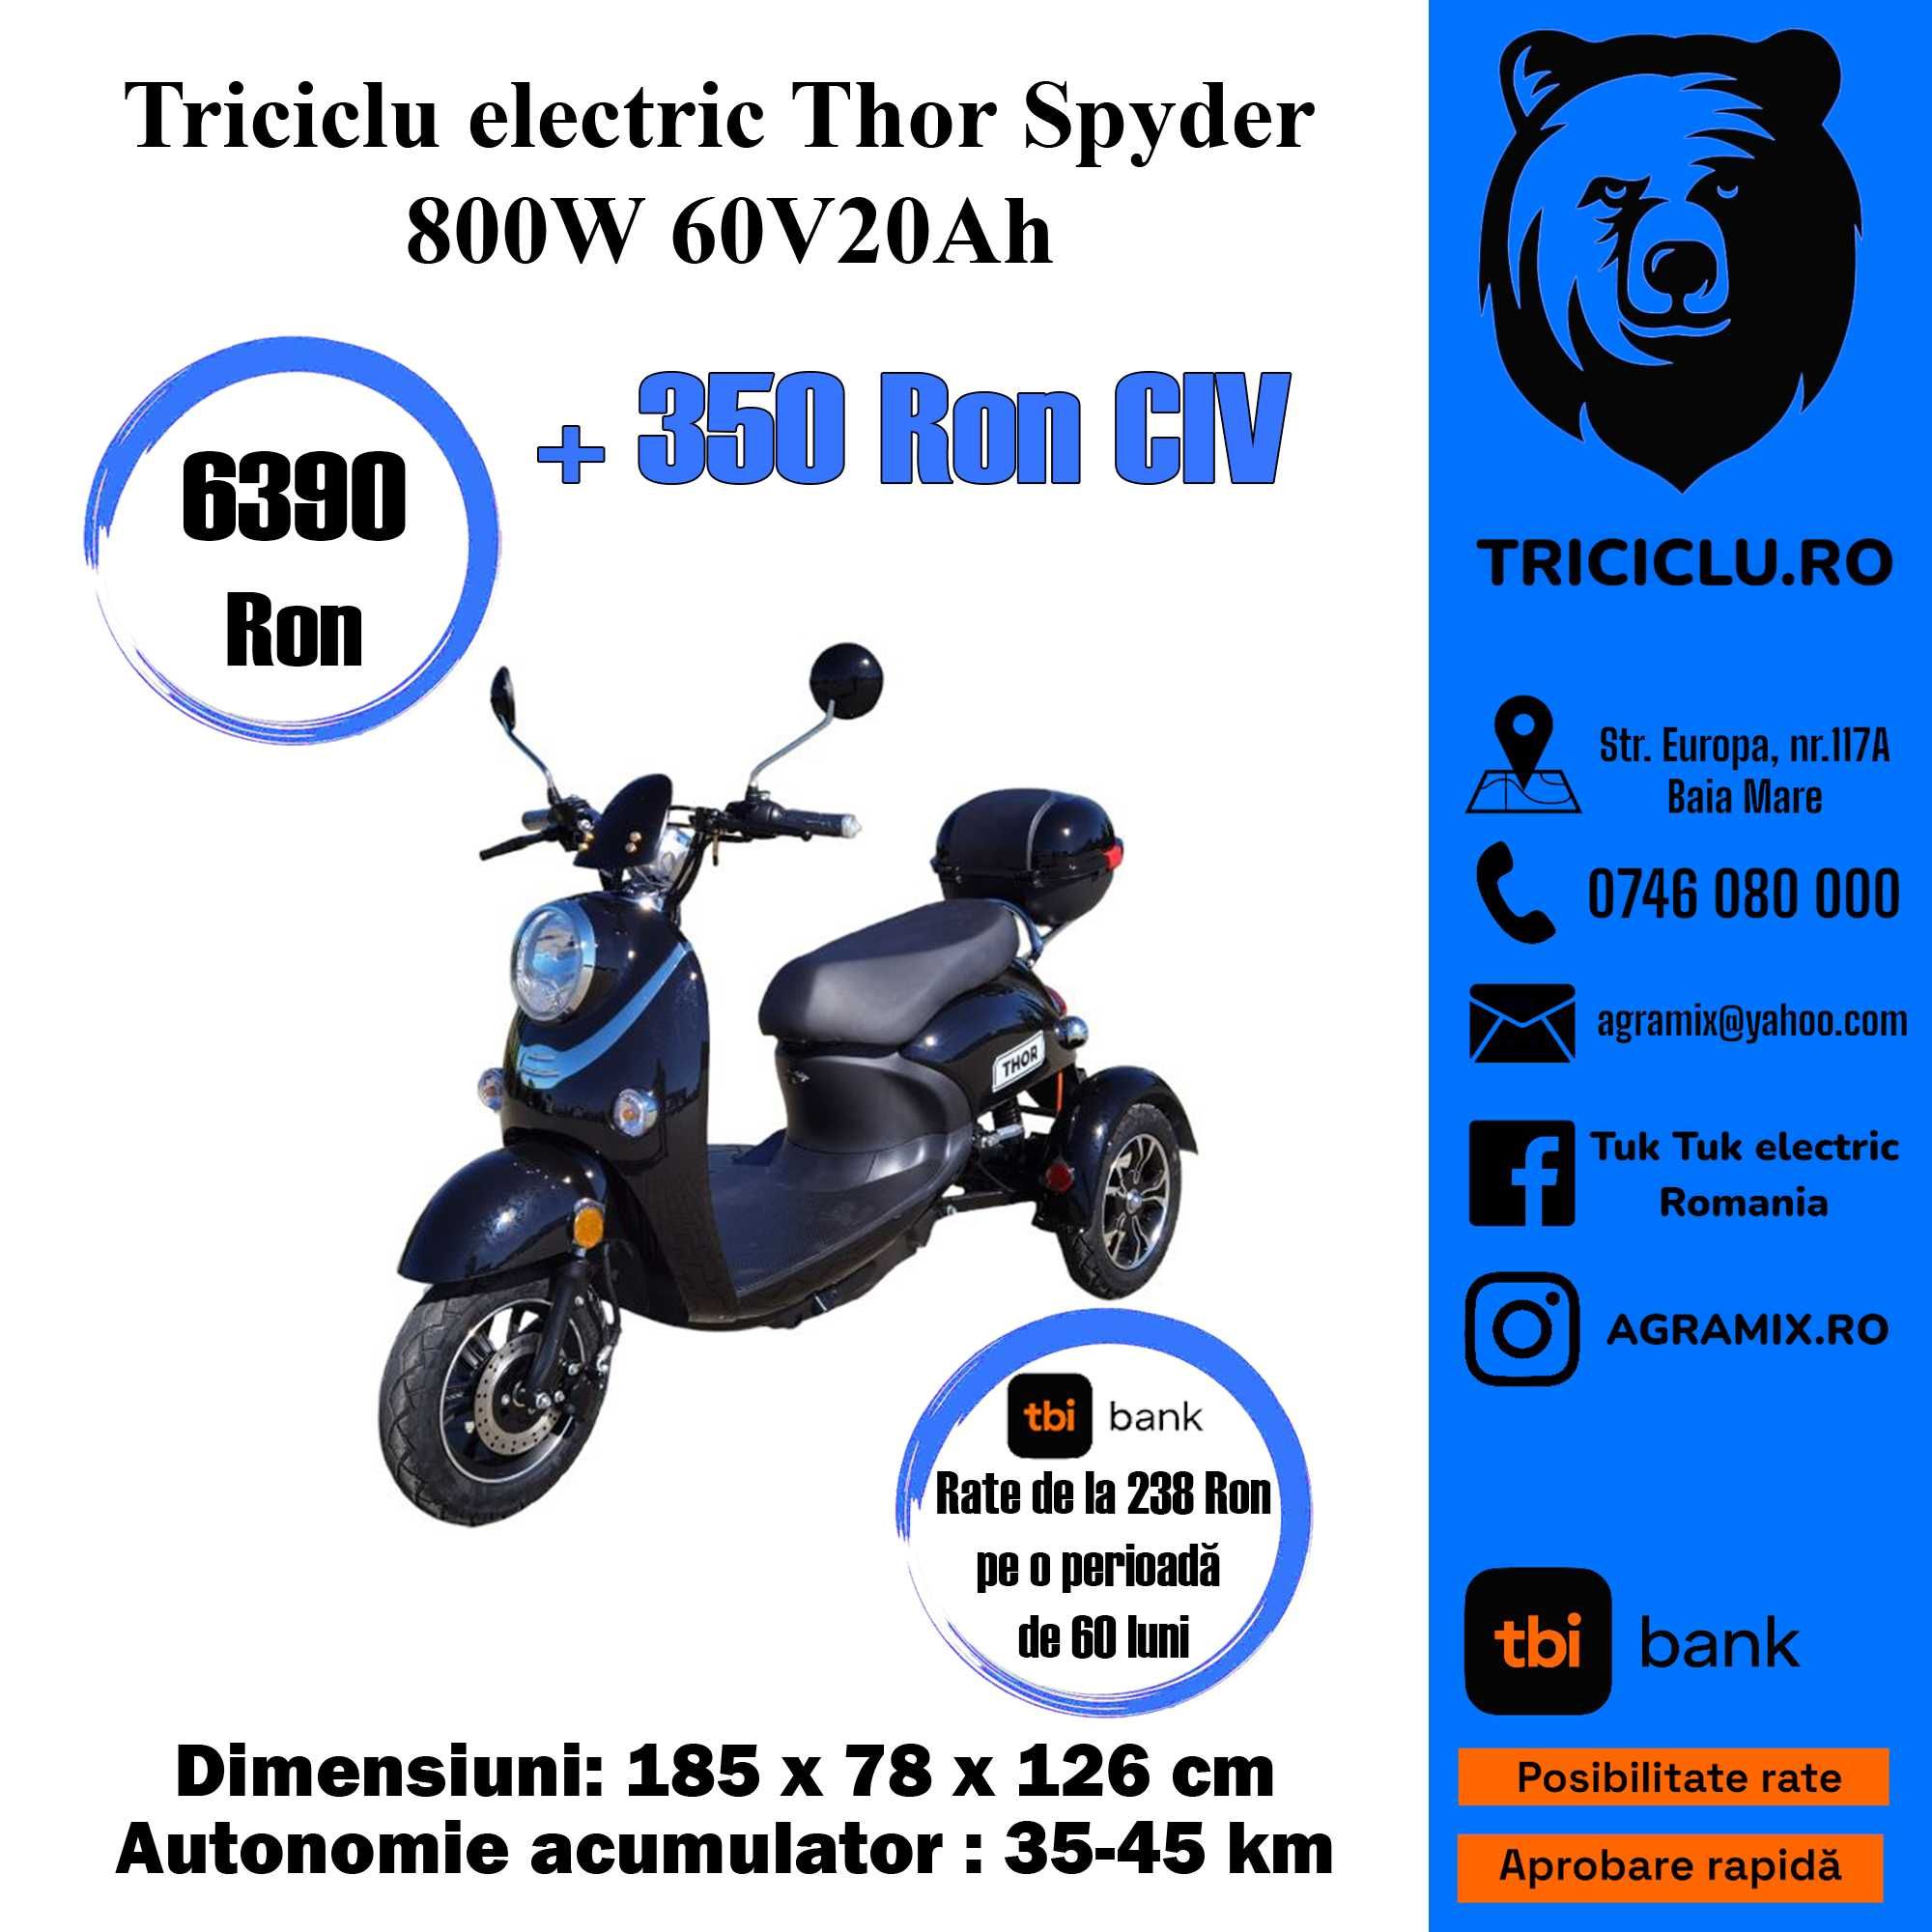 Triciclu electric Thor Spyder 800W 60V20Ah nou Agramix